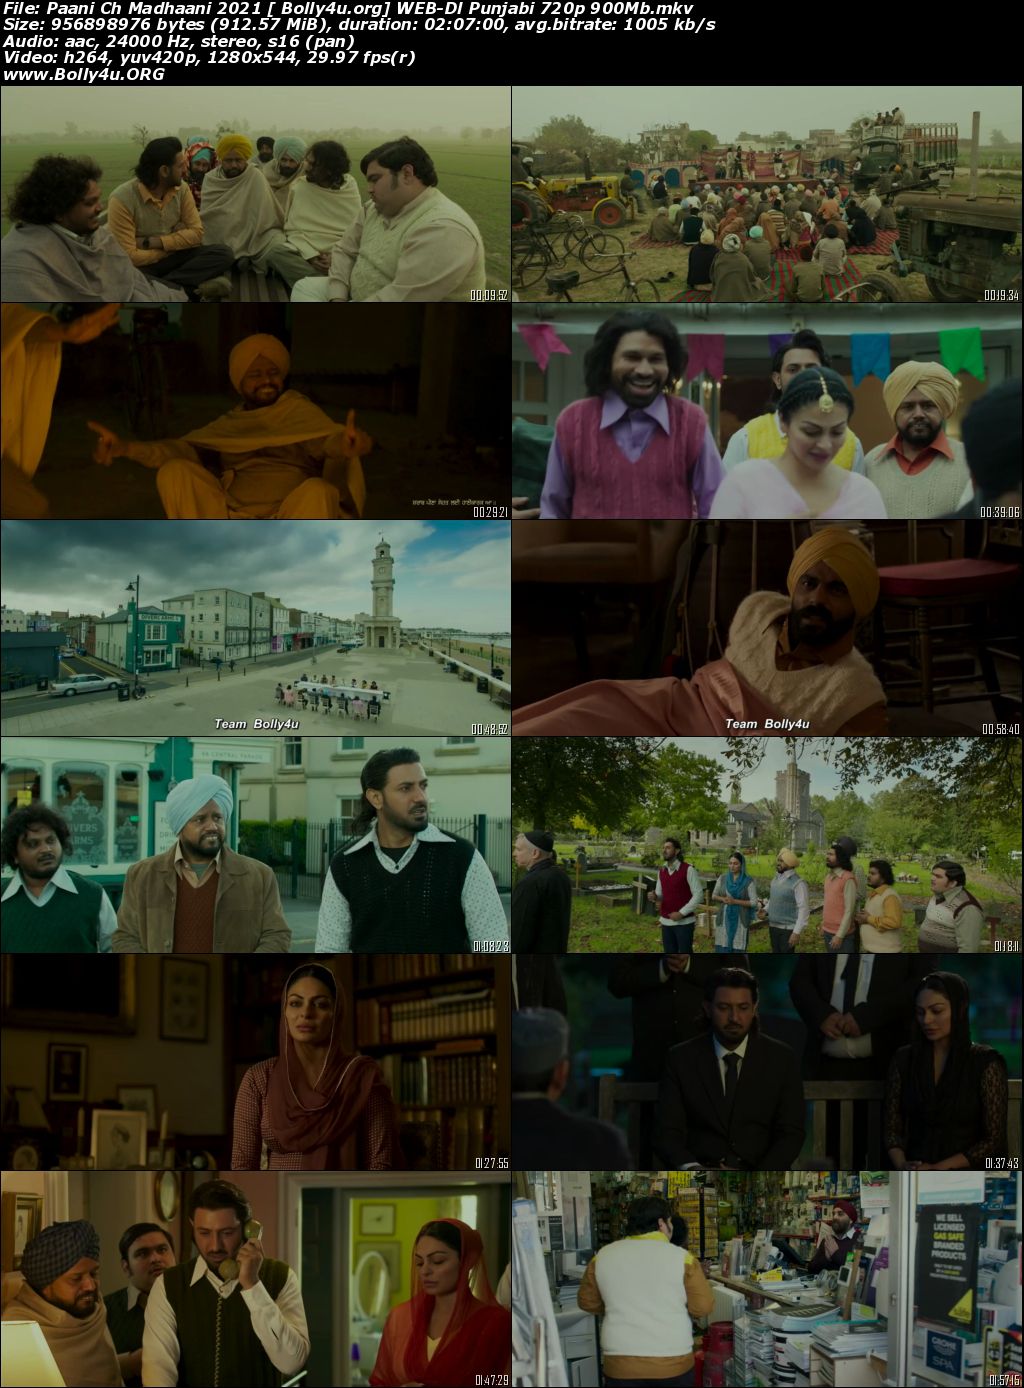 Paani Ch Madhaani 2021 WEB-DL 900MB Punjabi Movie Download 720p